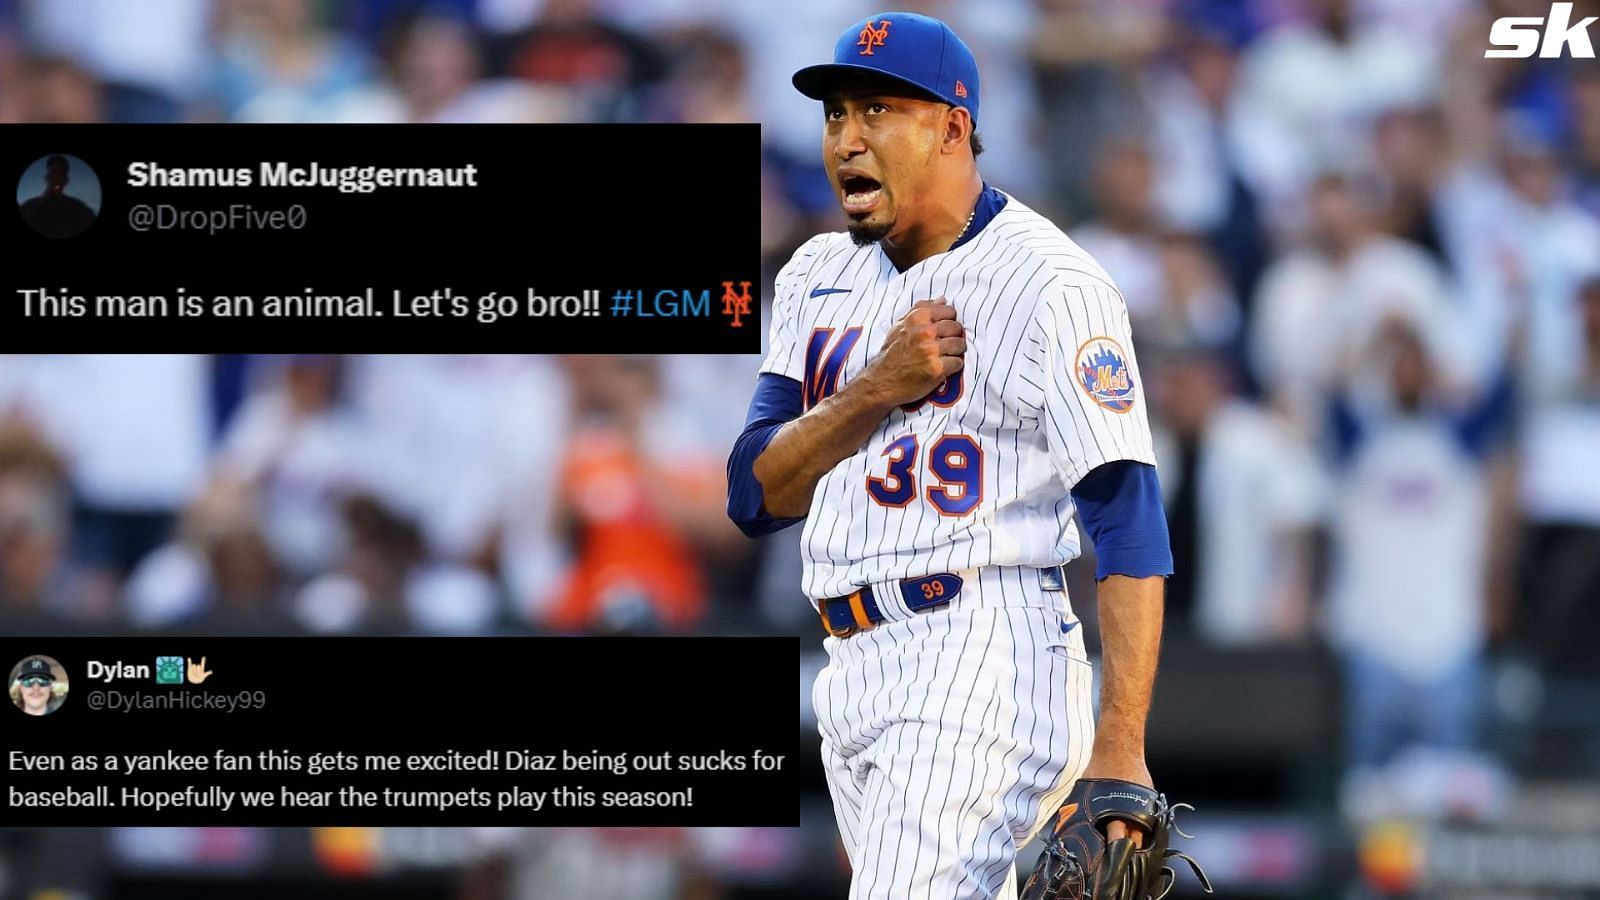 Mets' Edwin Diaz Suffered Patellar Tendon Injury, Team Says